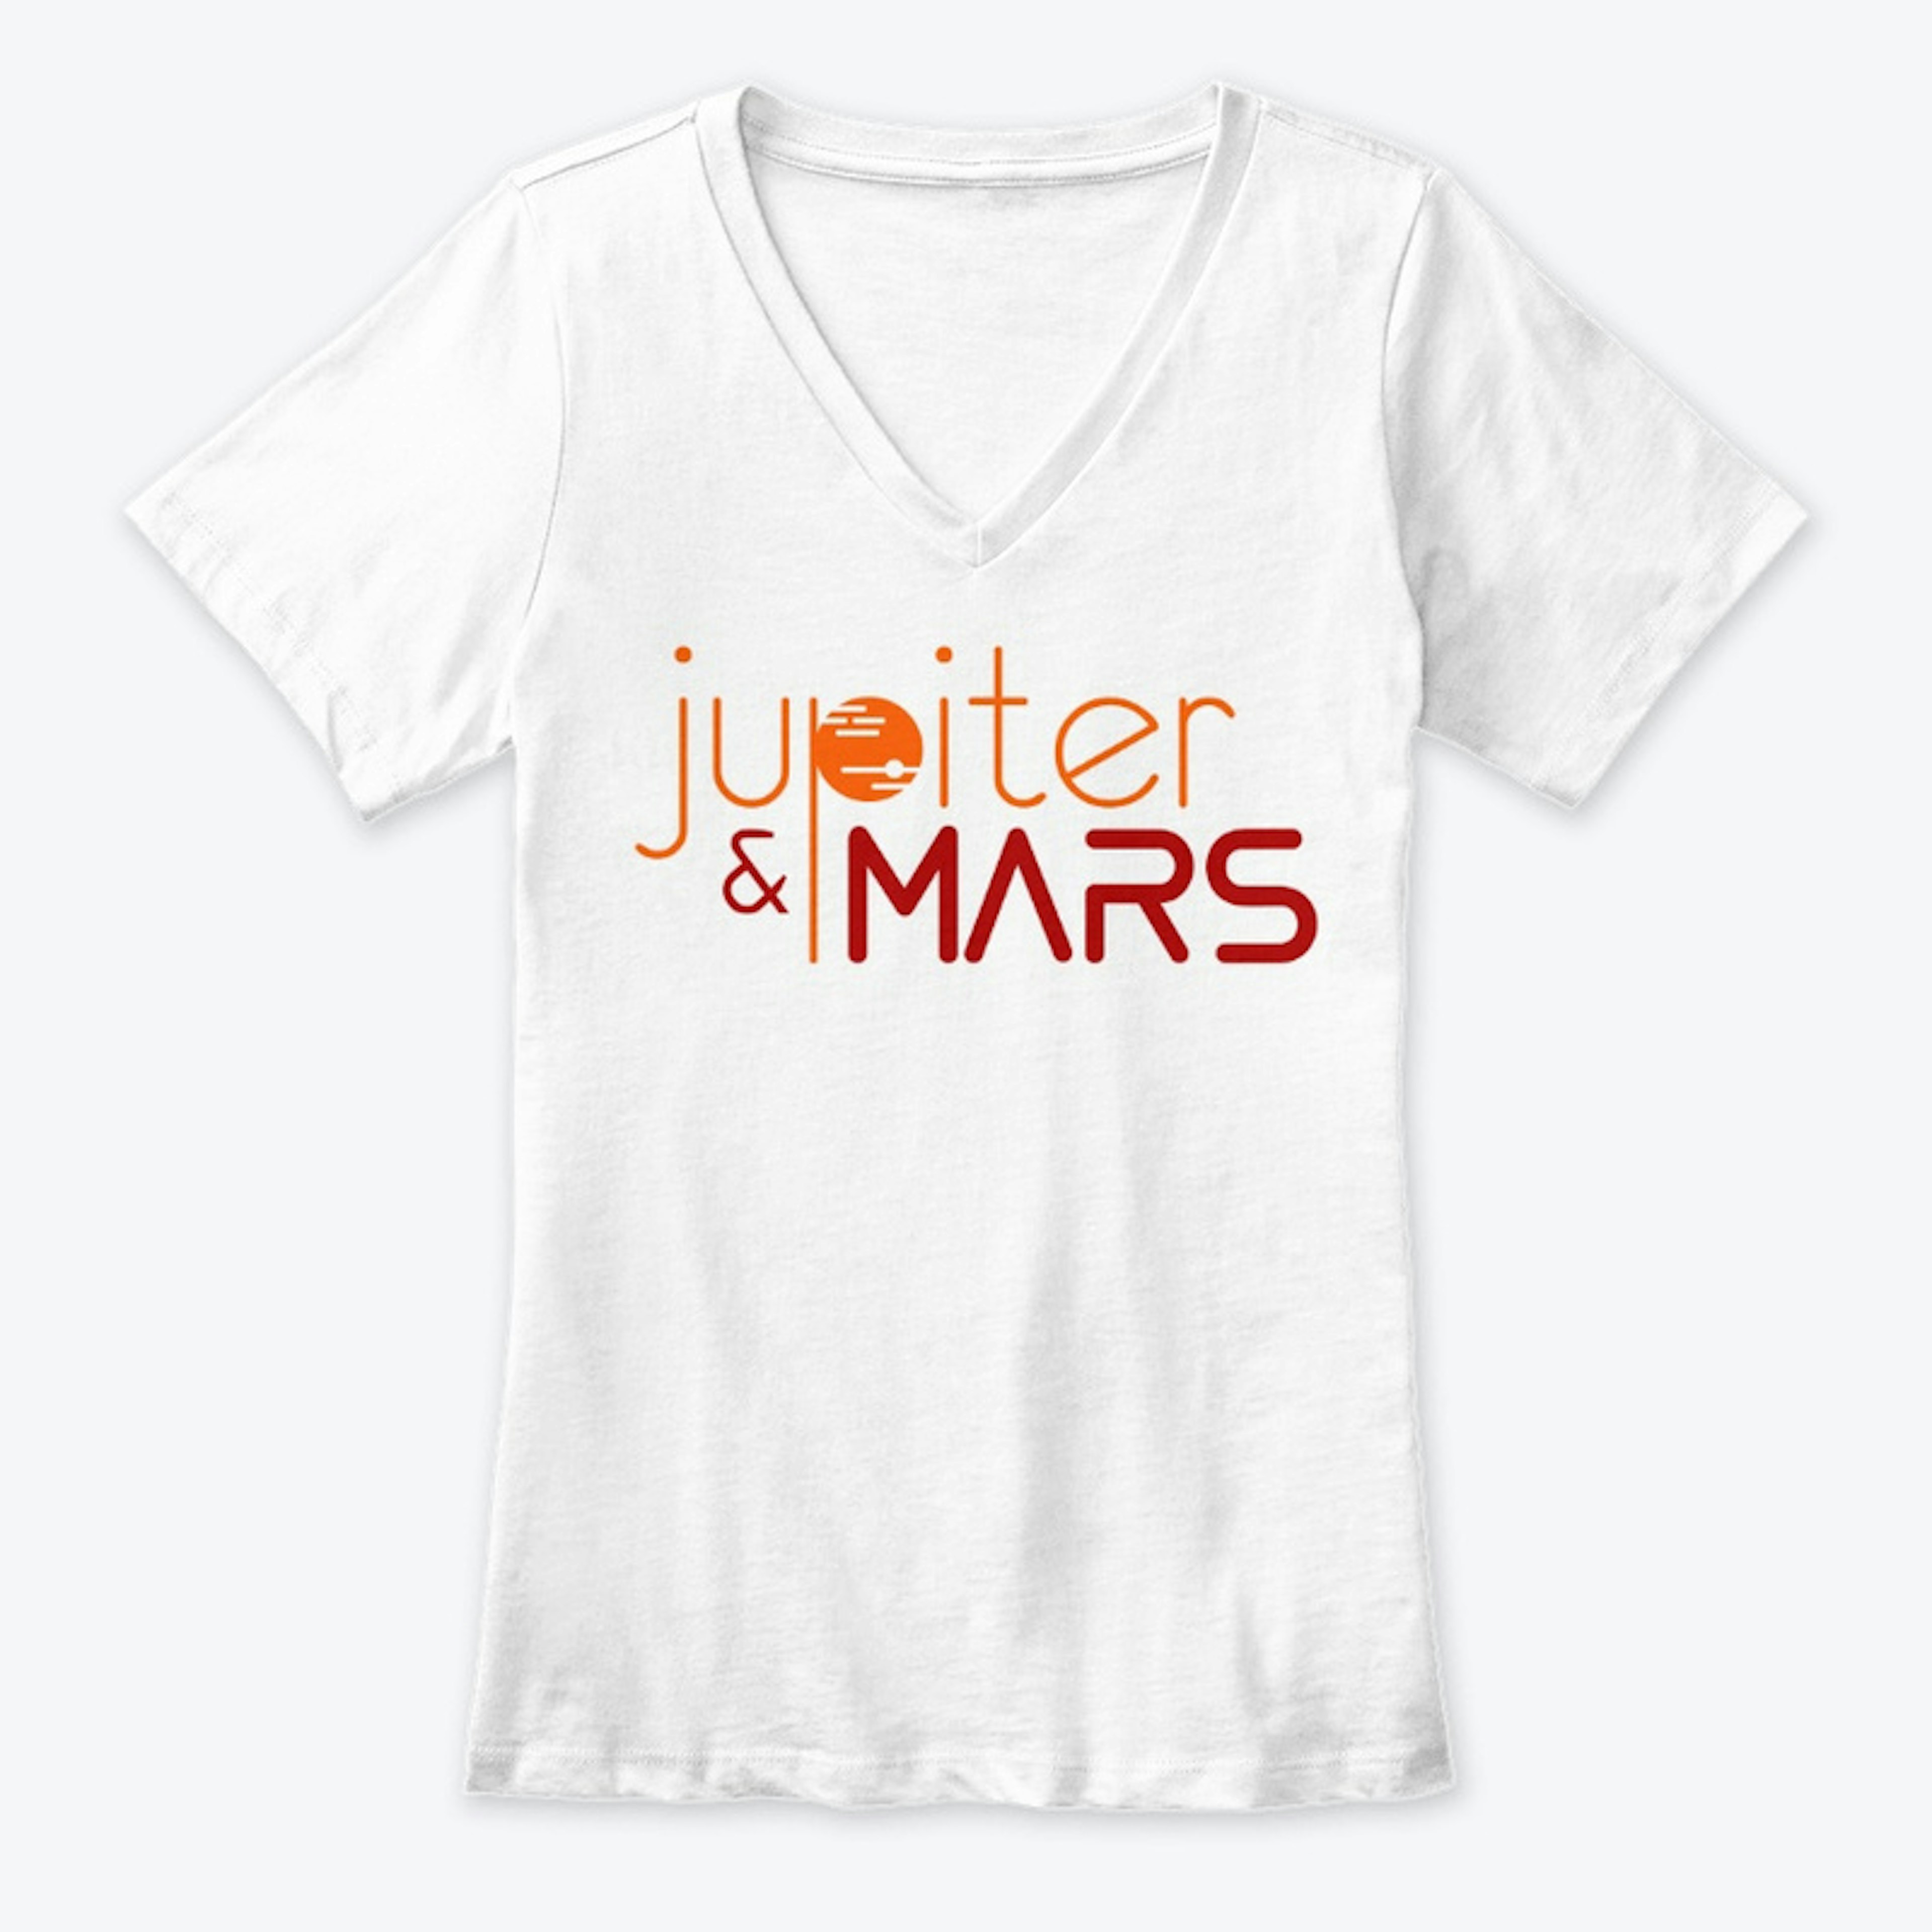 Jupiter & Mars Woman's T-Shirt